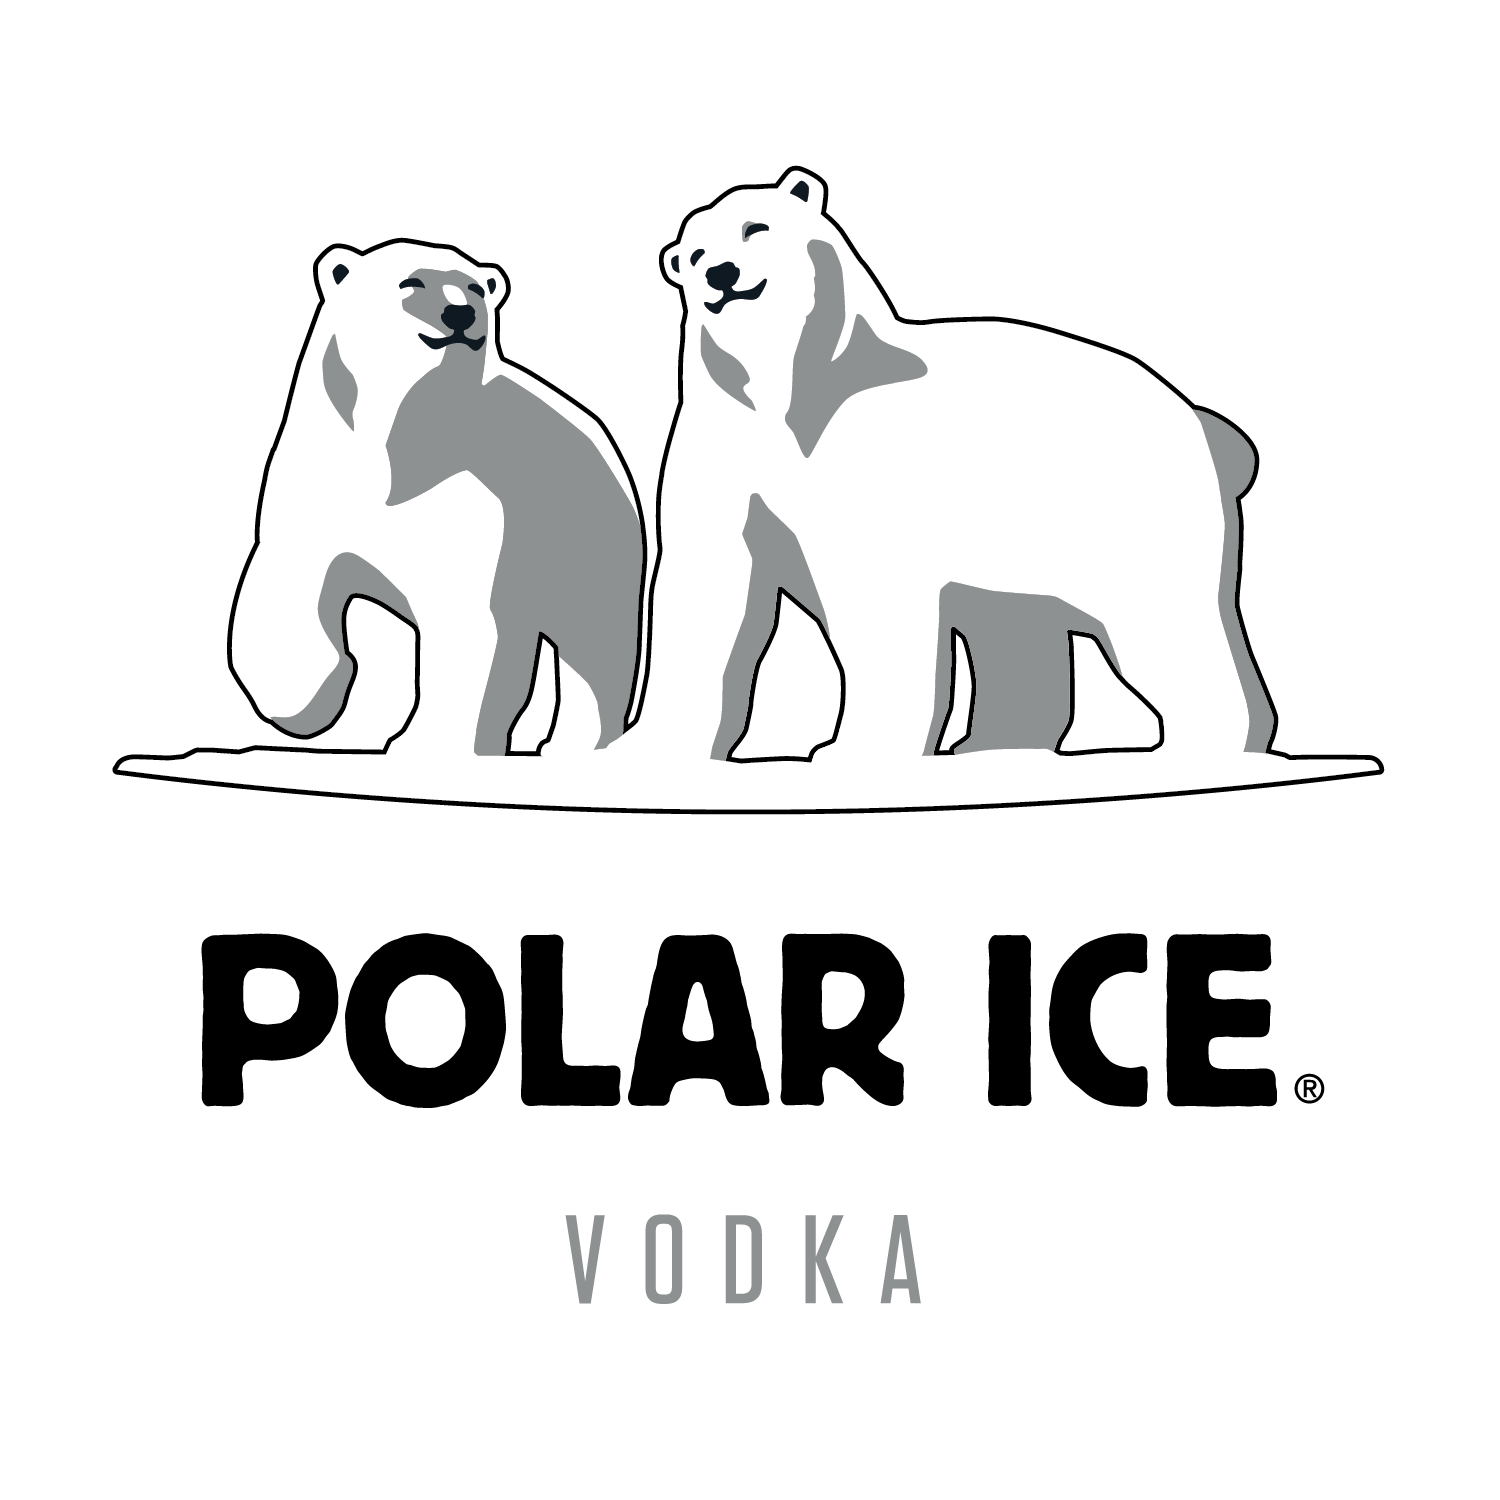 Polar Ice Vodka logo